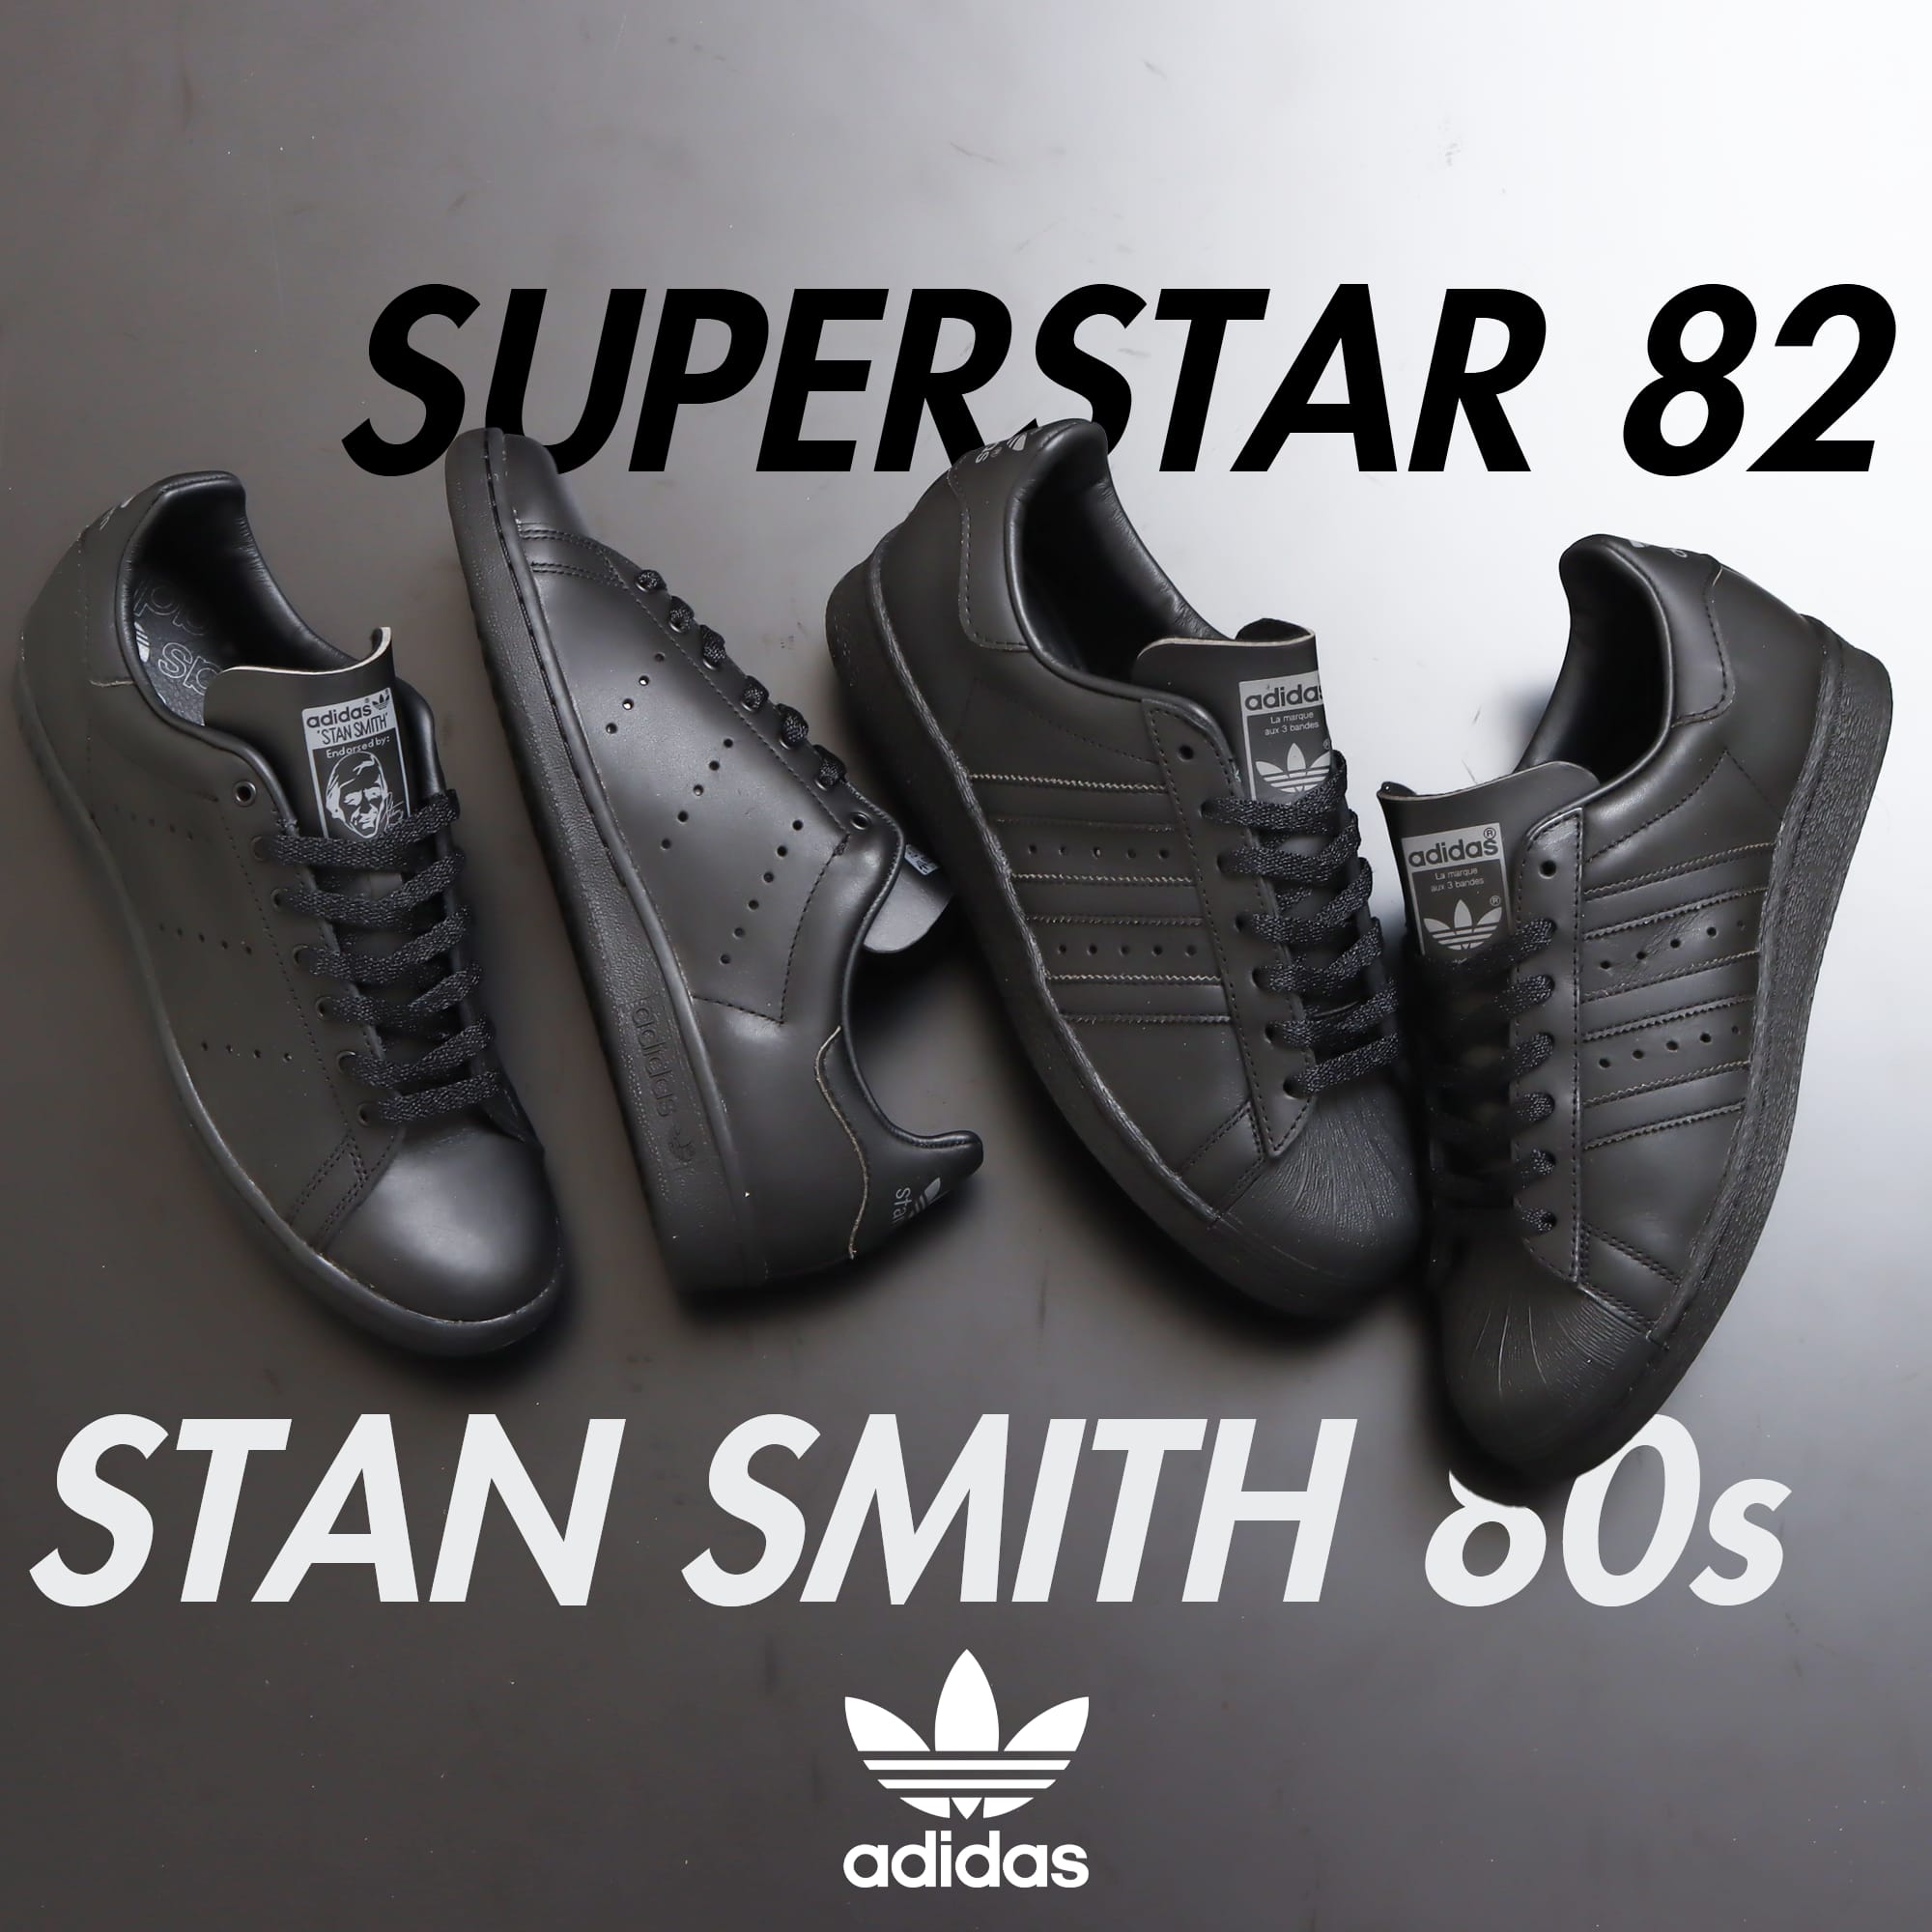 adidas Originals STAN SMITH 80s / SUPERSTAR 82